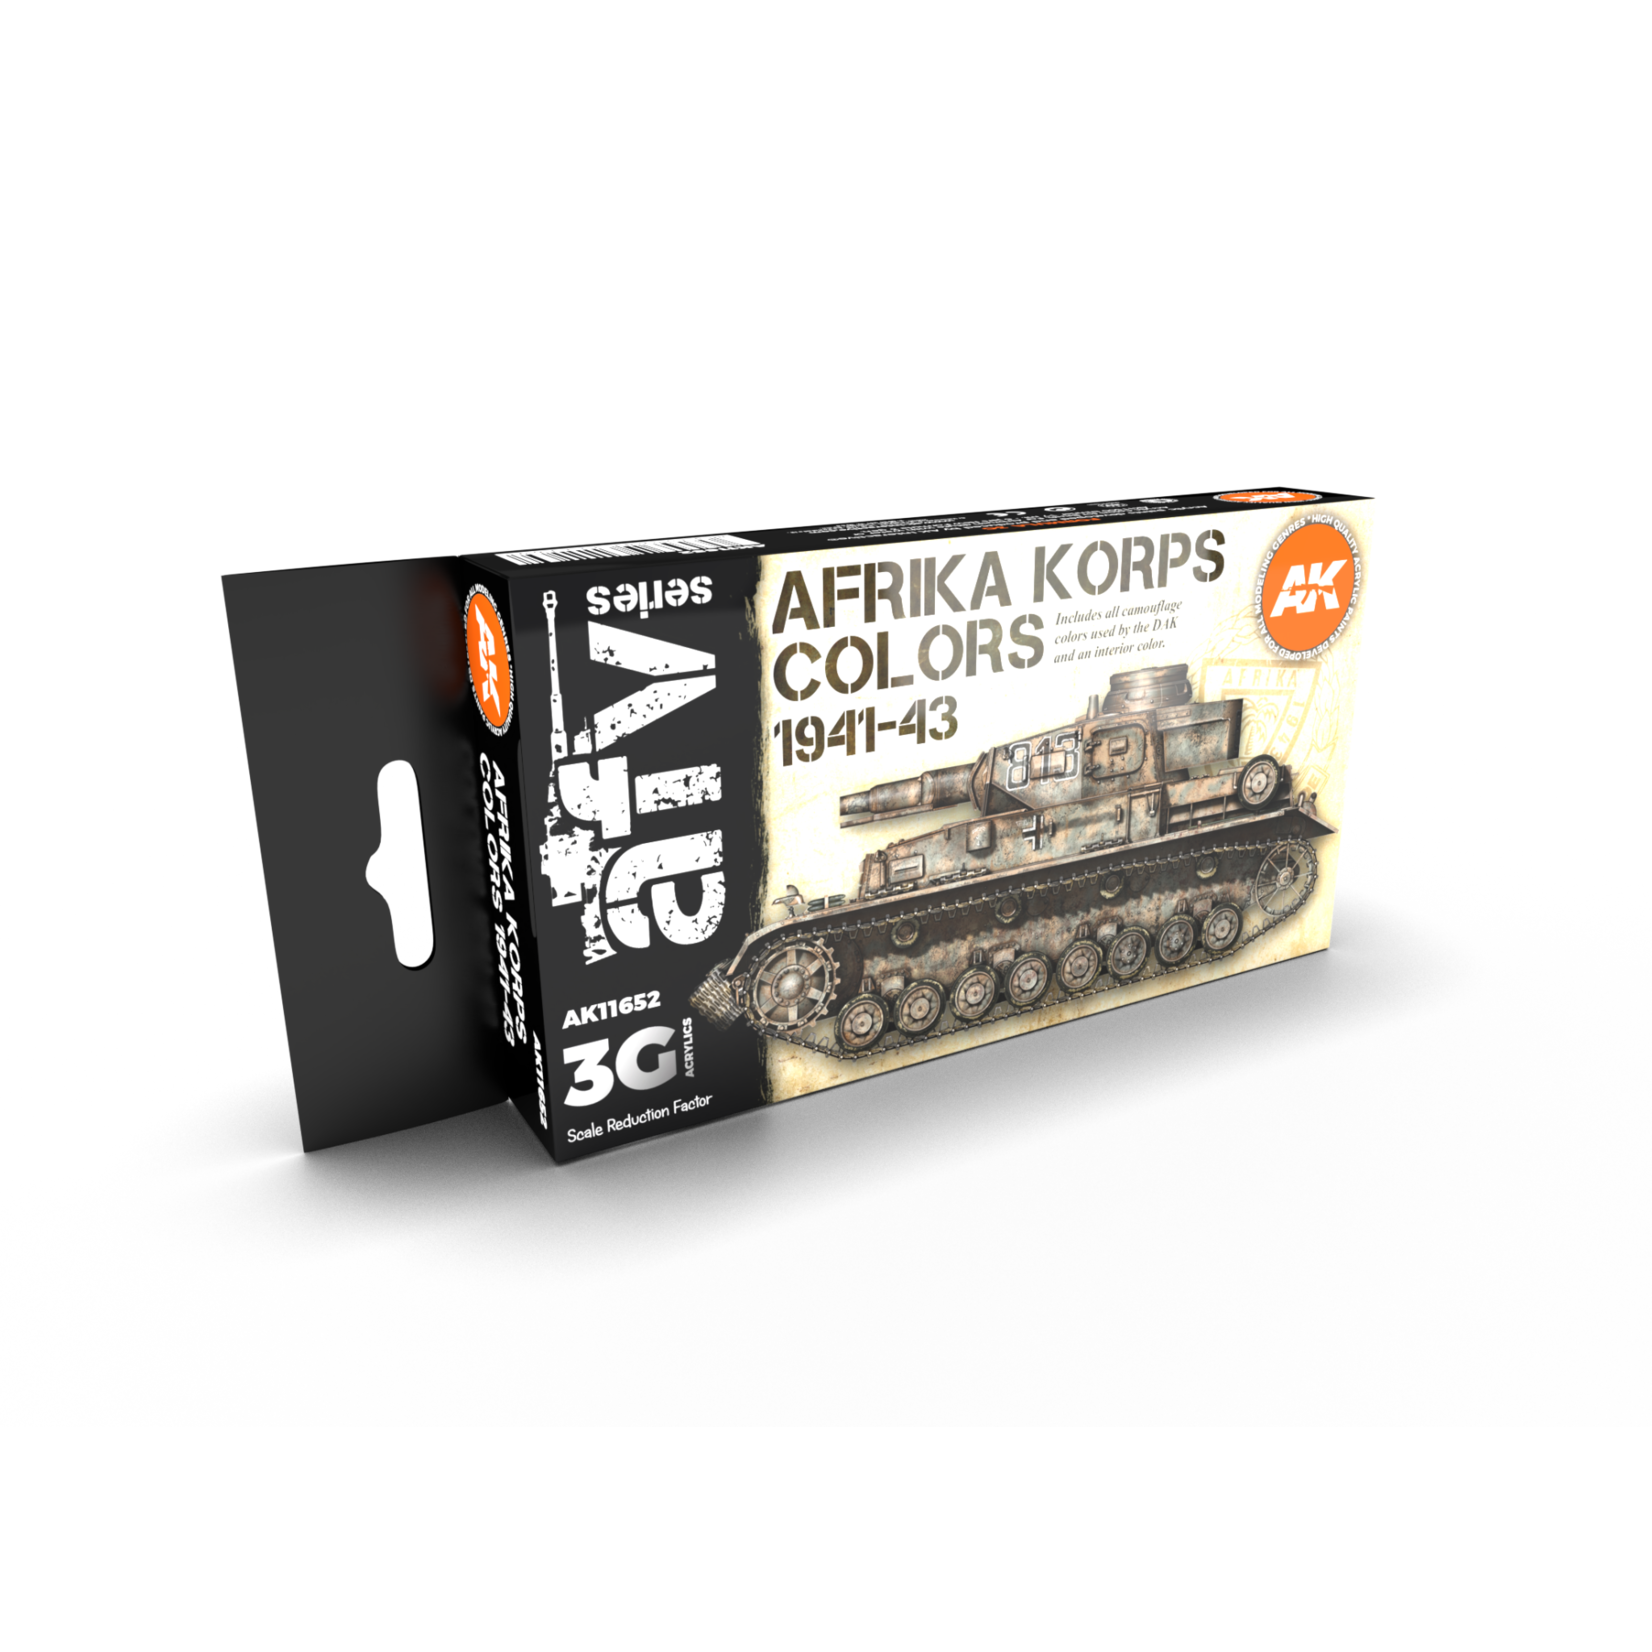 AK Interactive AK-11652 Afrika Korps Colors 1941-43